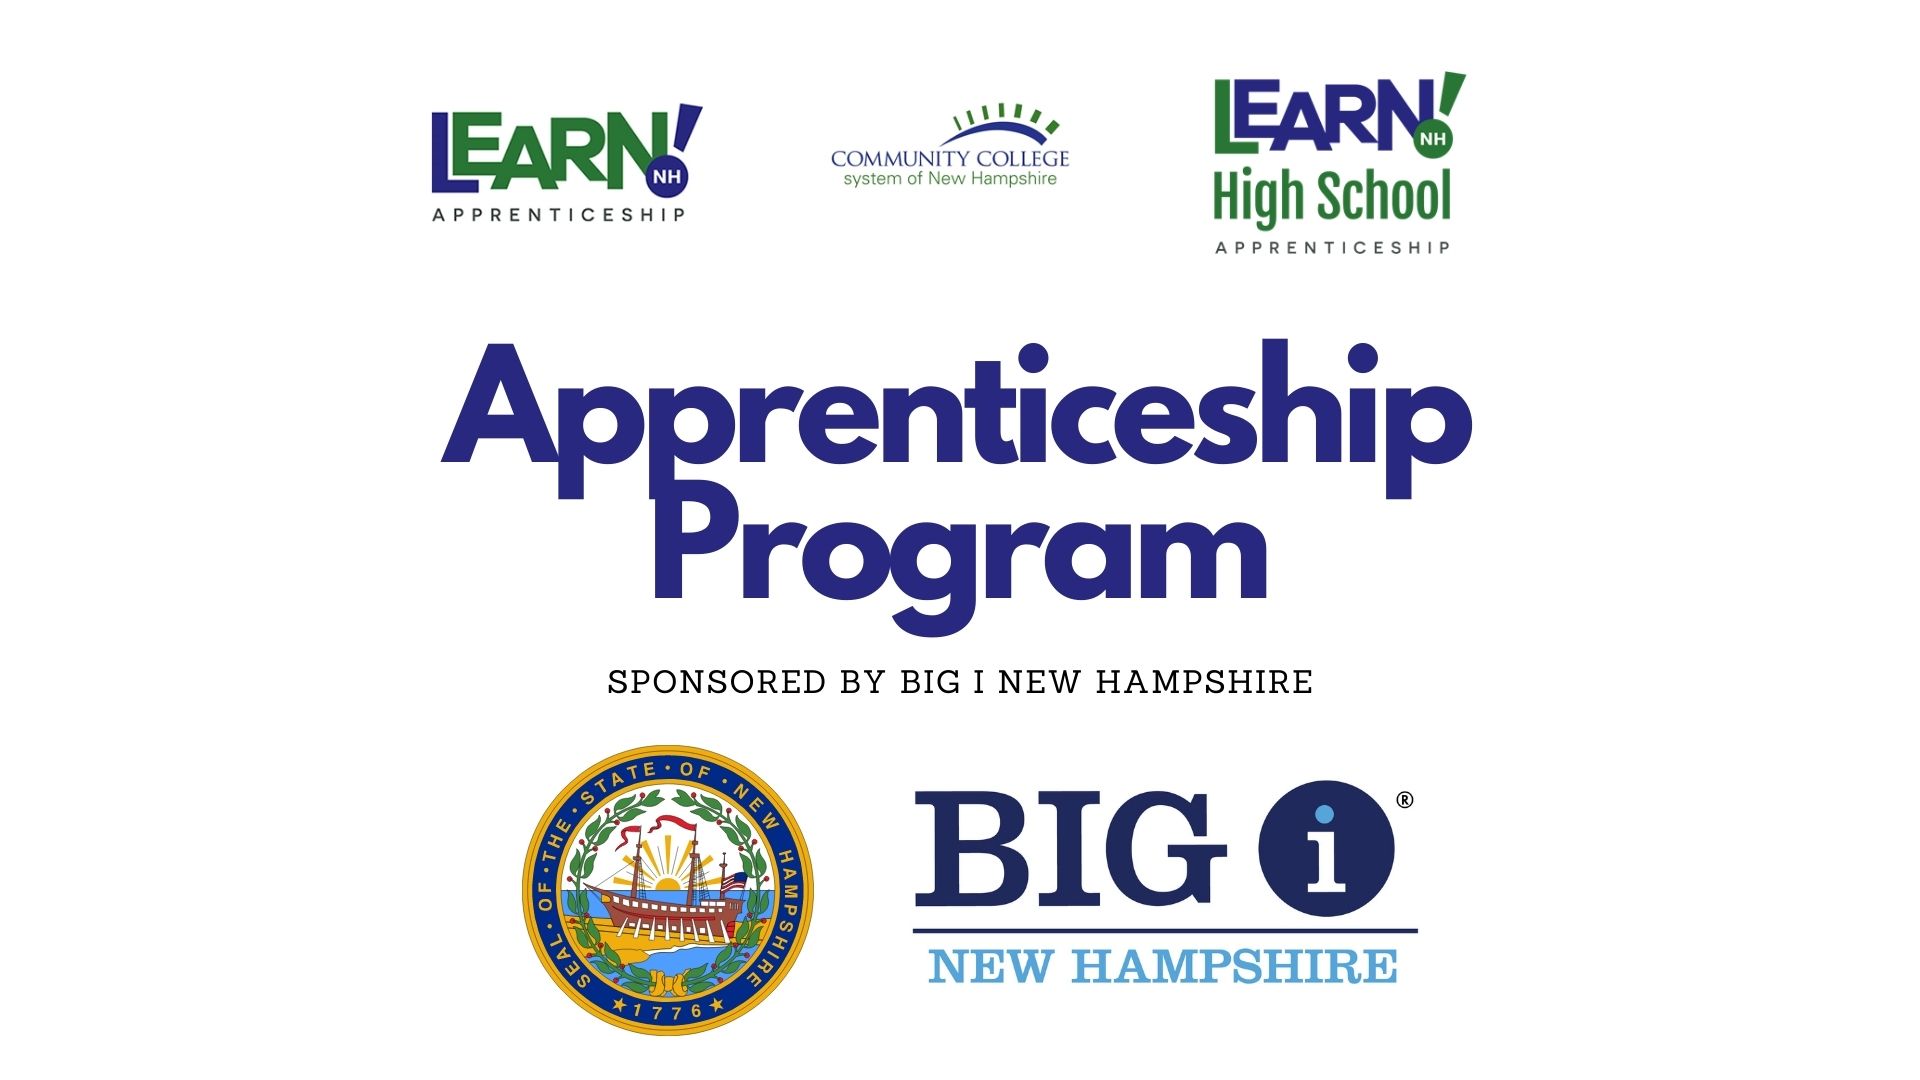 High school apprenticeship program